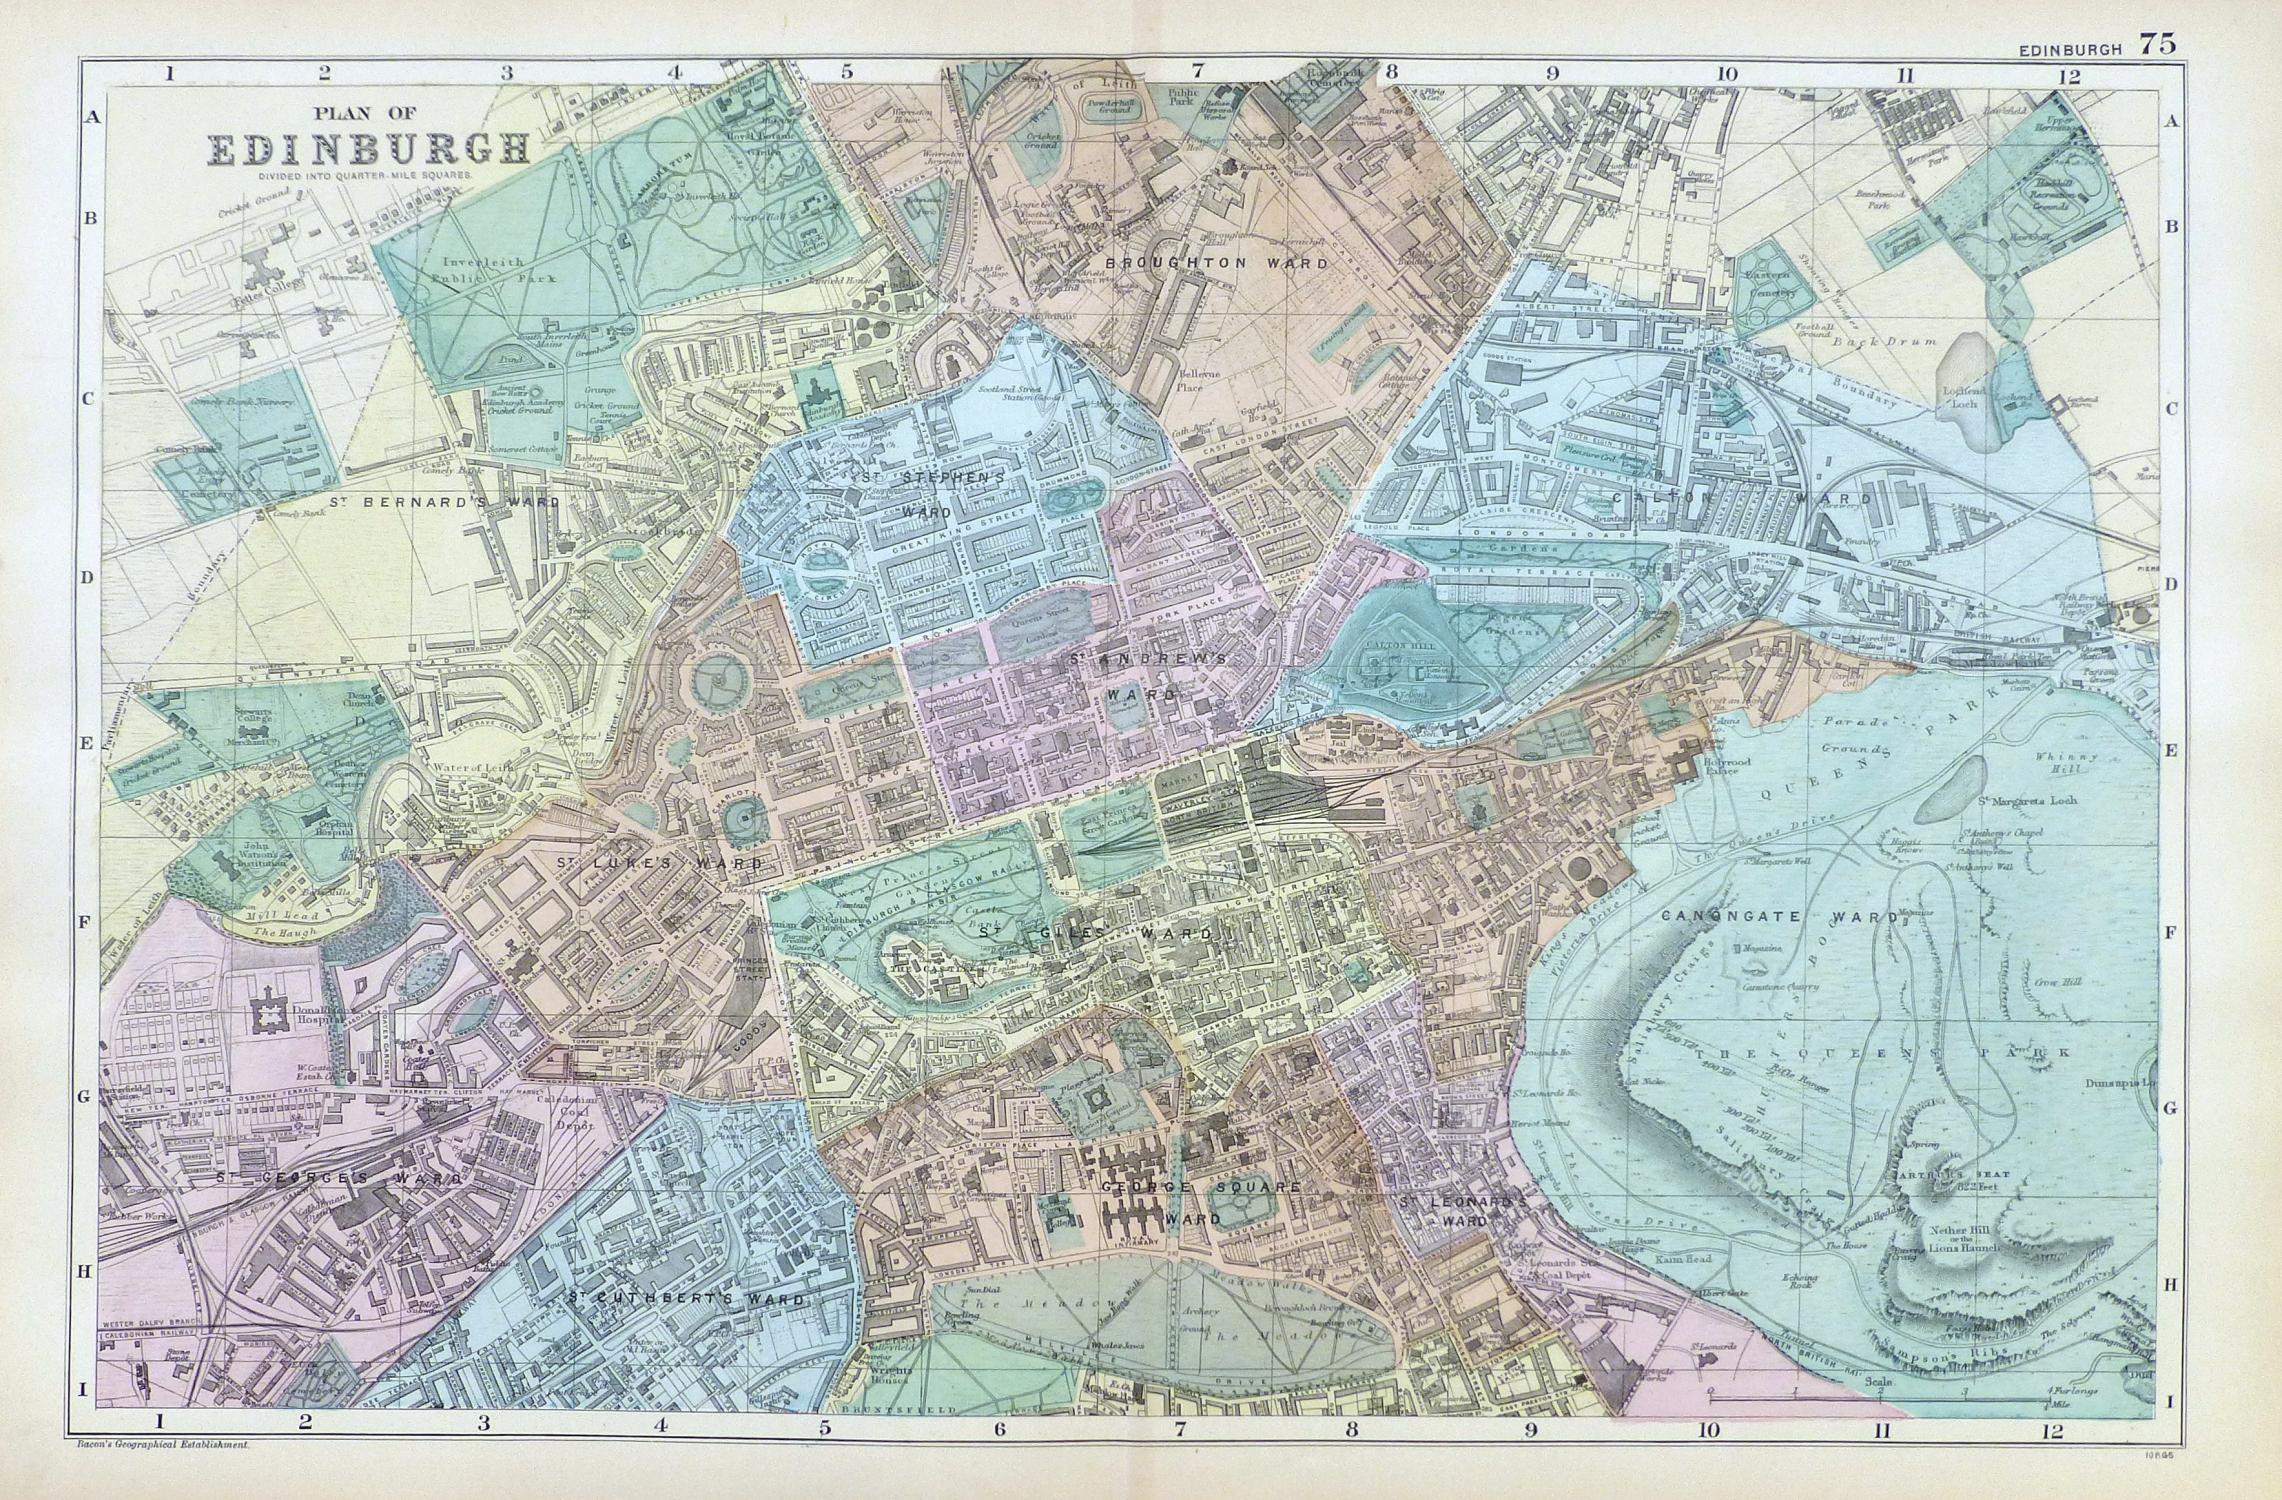 EDINBURGH - ORIGINAL ANTIQUE MAP / CITY STREET PLAN by G.W. Bacon